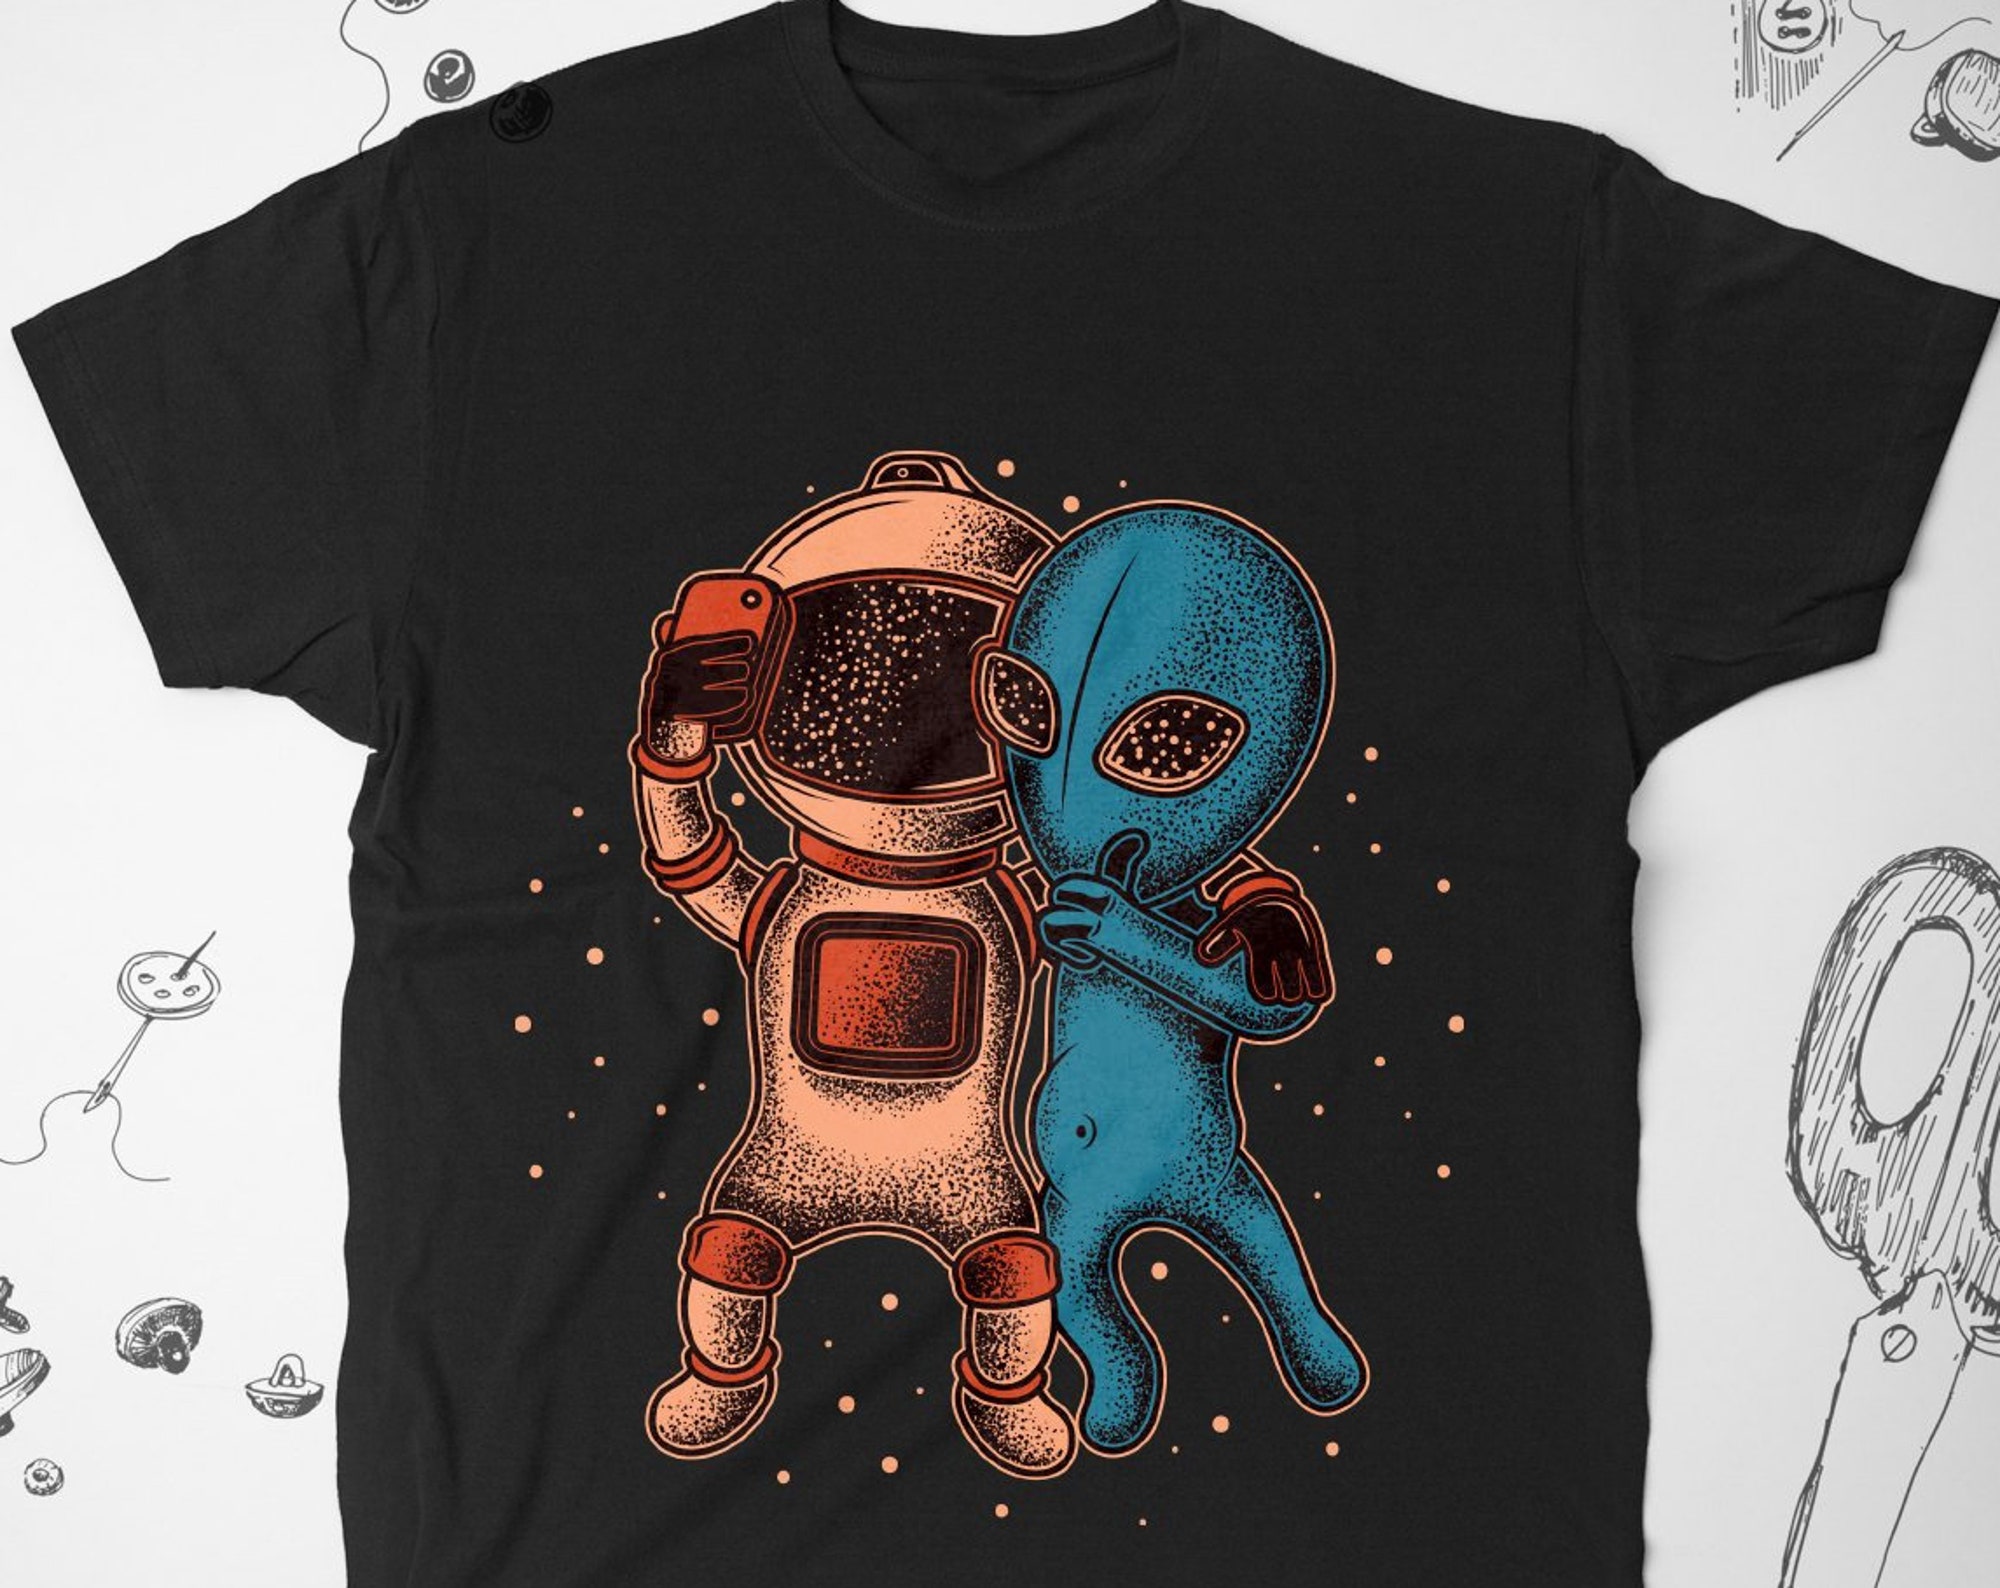 Alien shirt Vintage Funny Space Graphic shirt Unisex Guy Astronaut Selfie Cute shirt Gift idea for him her